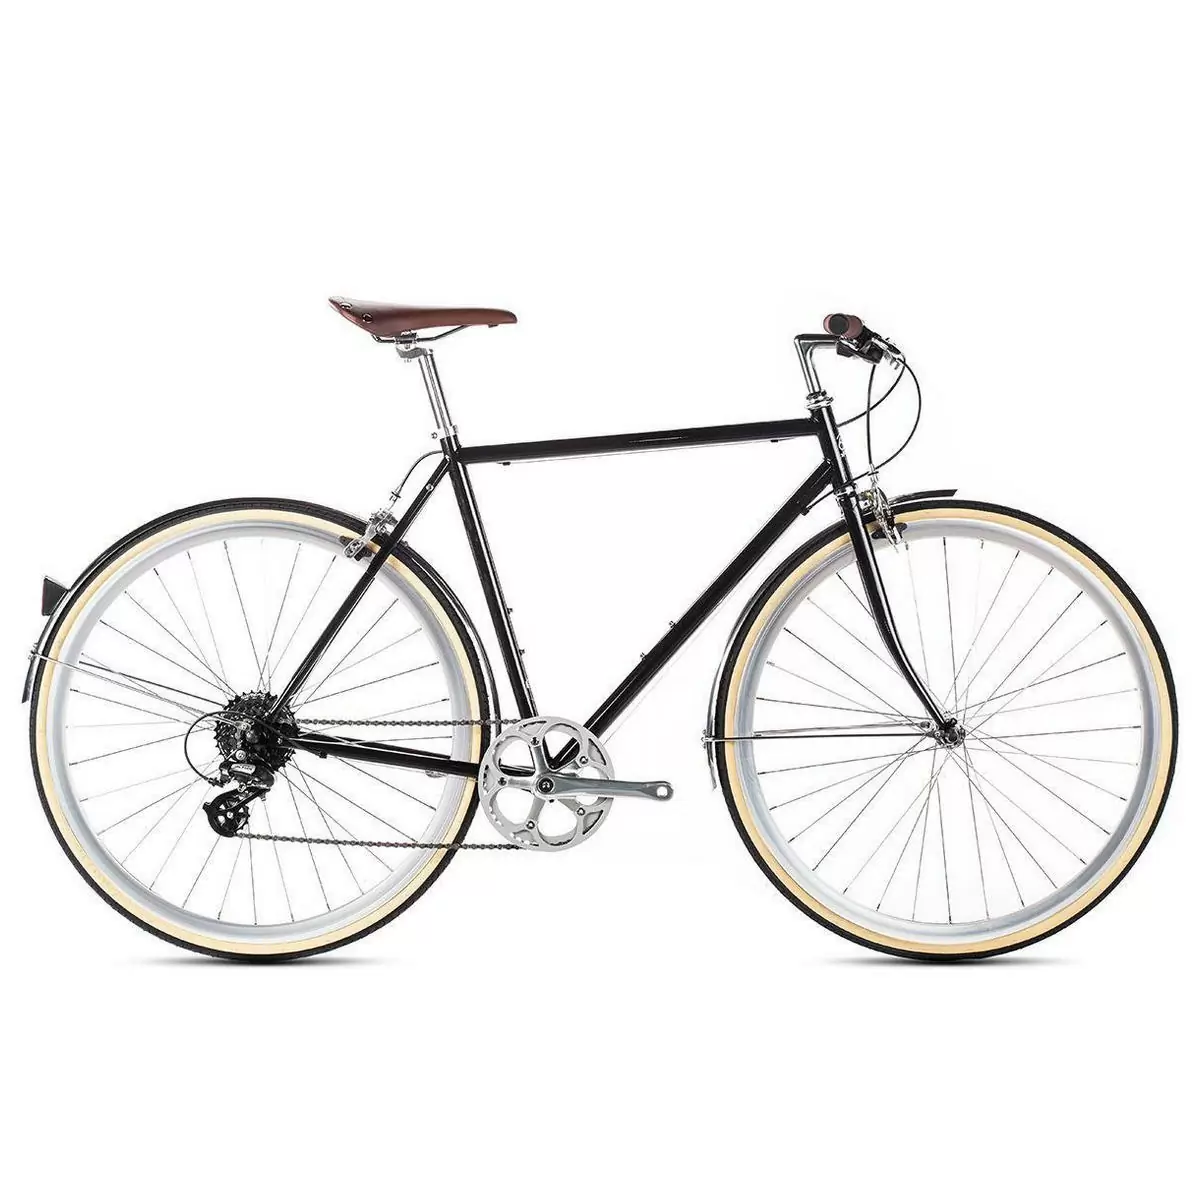 City bike ODYSSEY 8spd Delano black medium 54cm - image